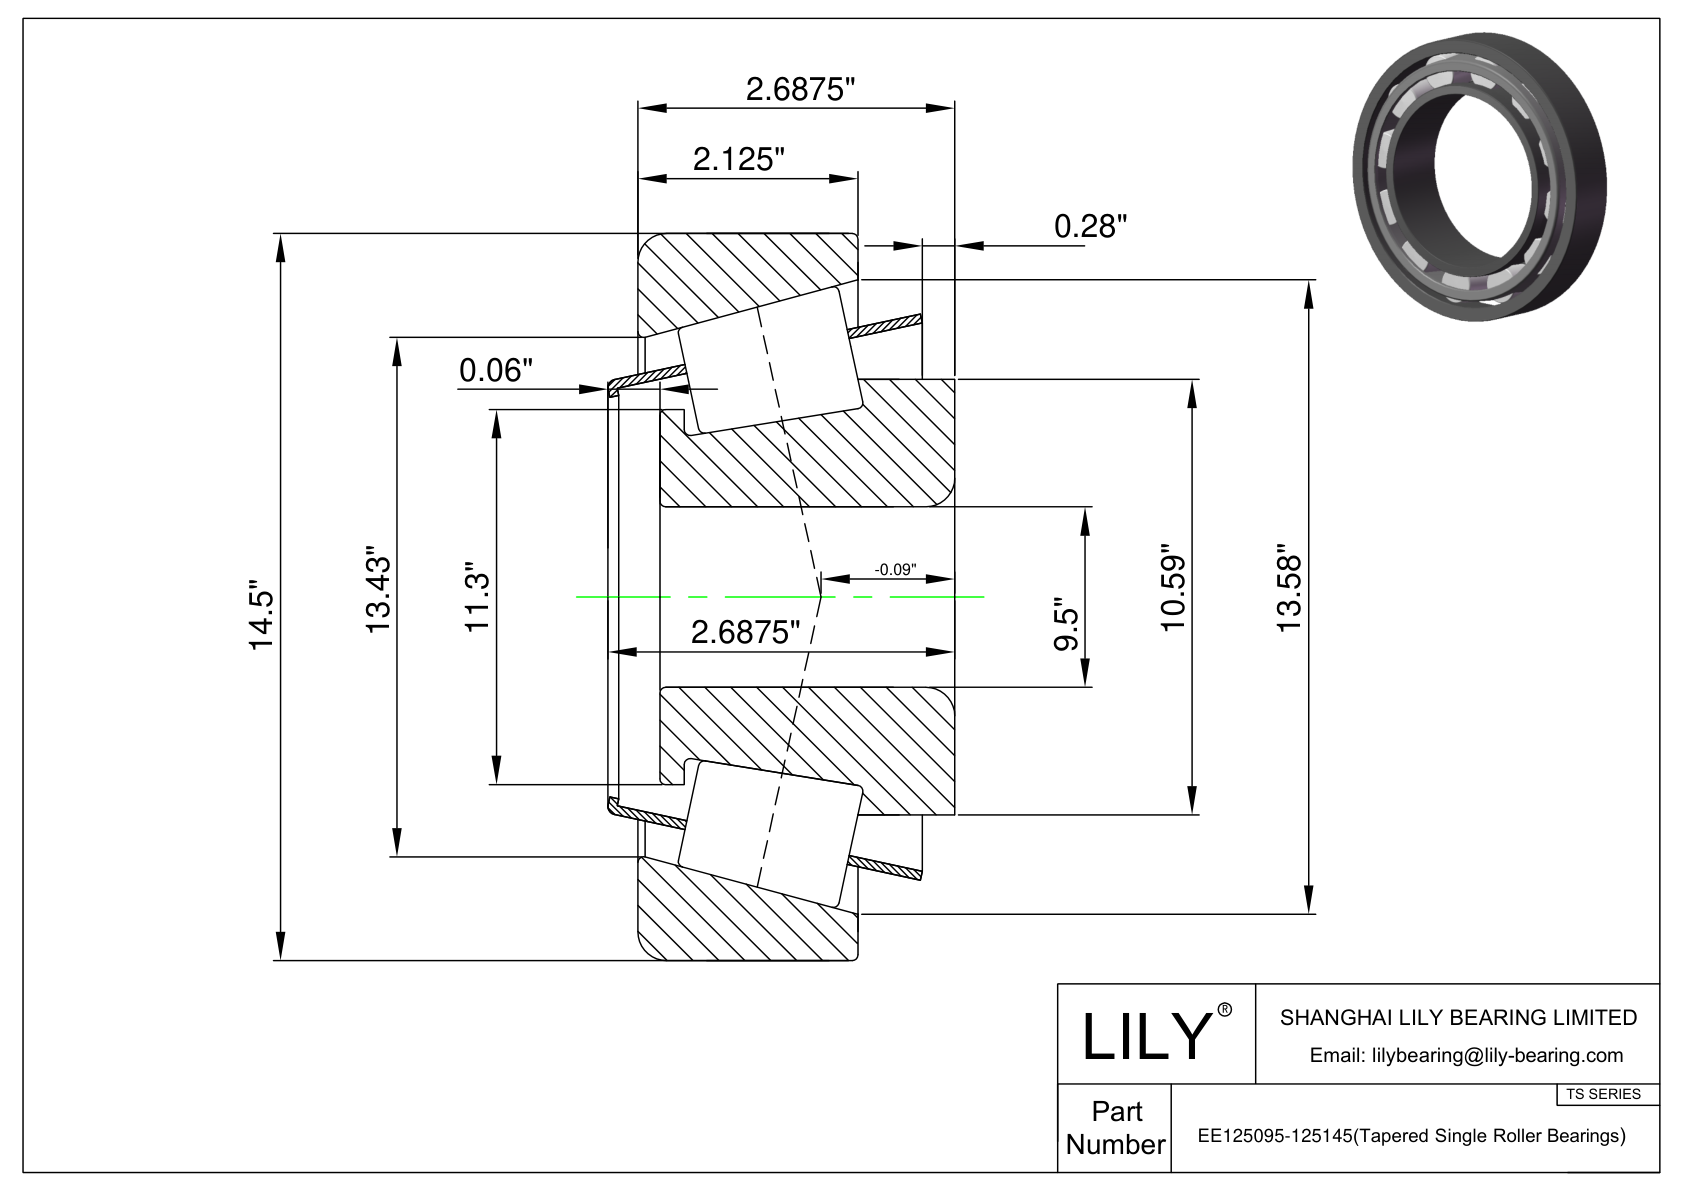 EE125095-125145 TS系列(圆锥单滚子轴承)(英制) CAD图形